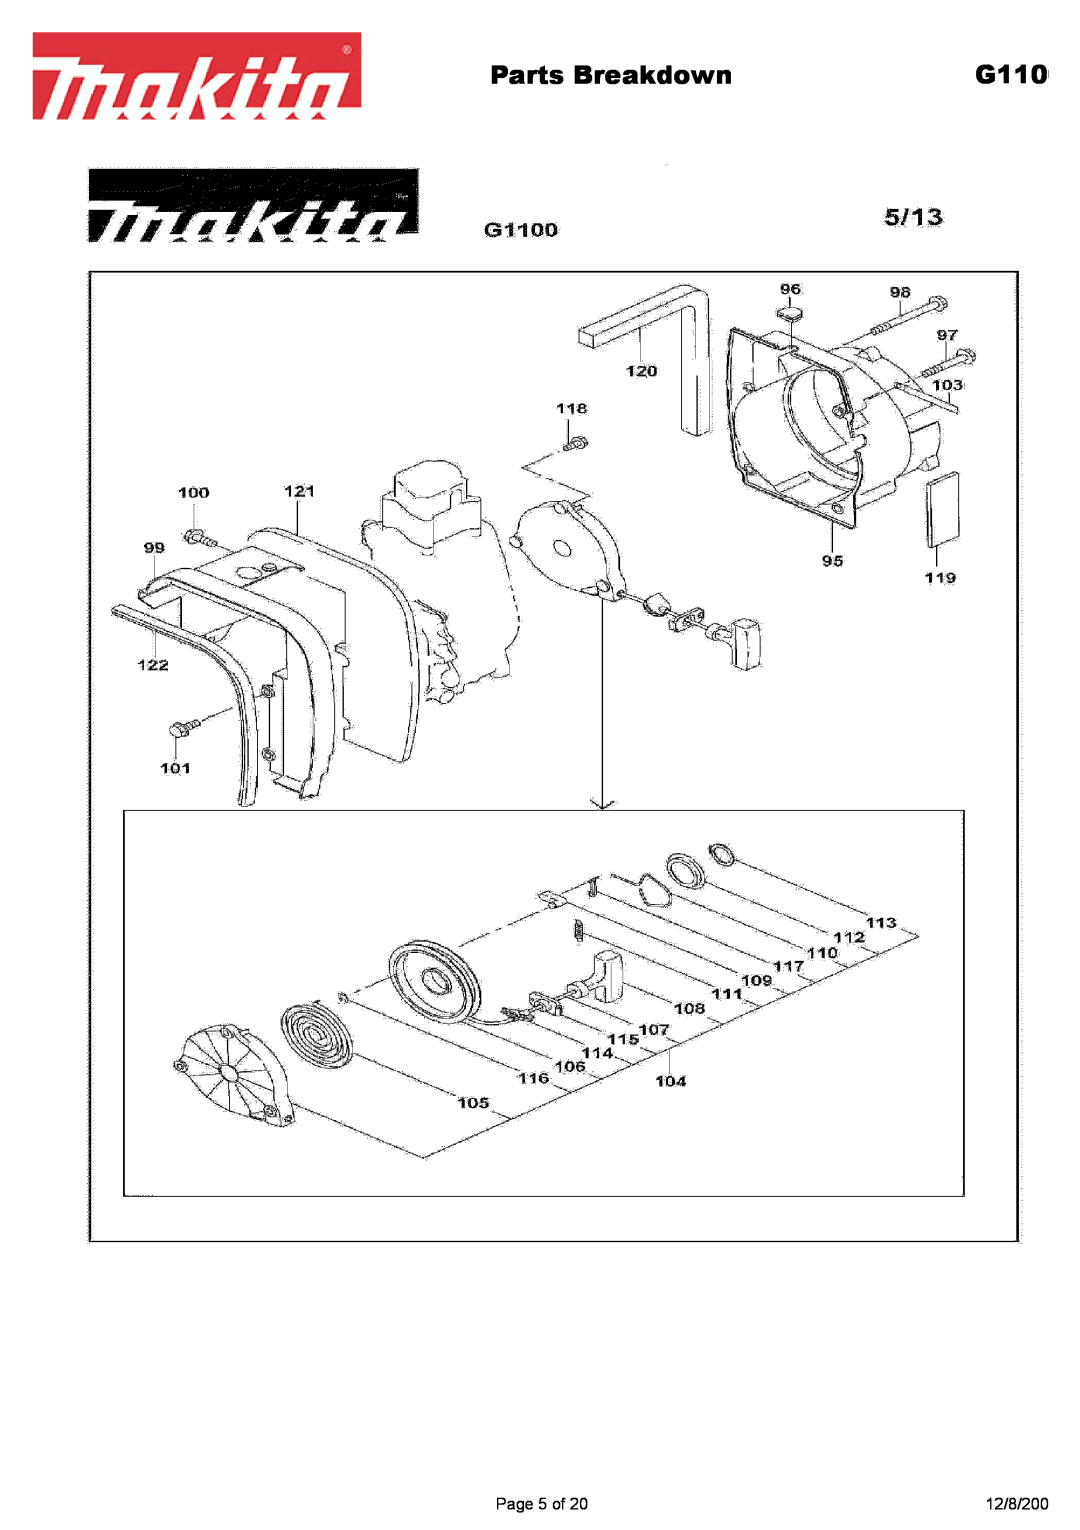 Makita G1700i manual Parts Breakdown, G110, Page 5 of, 12/8/200 